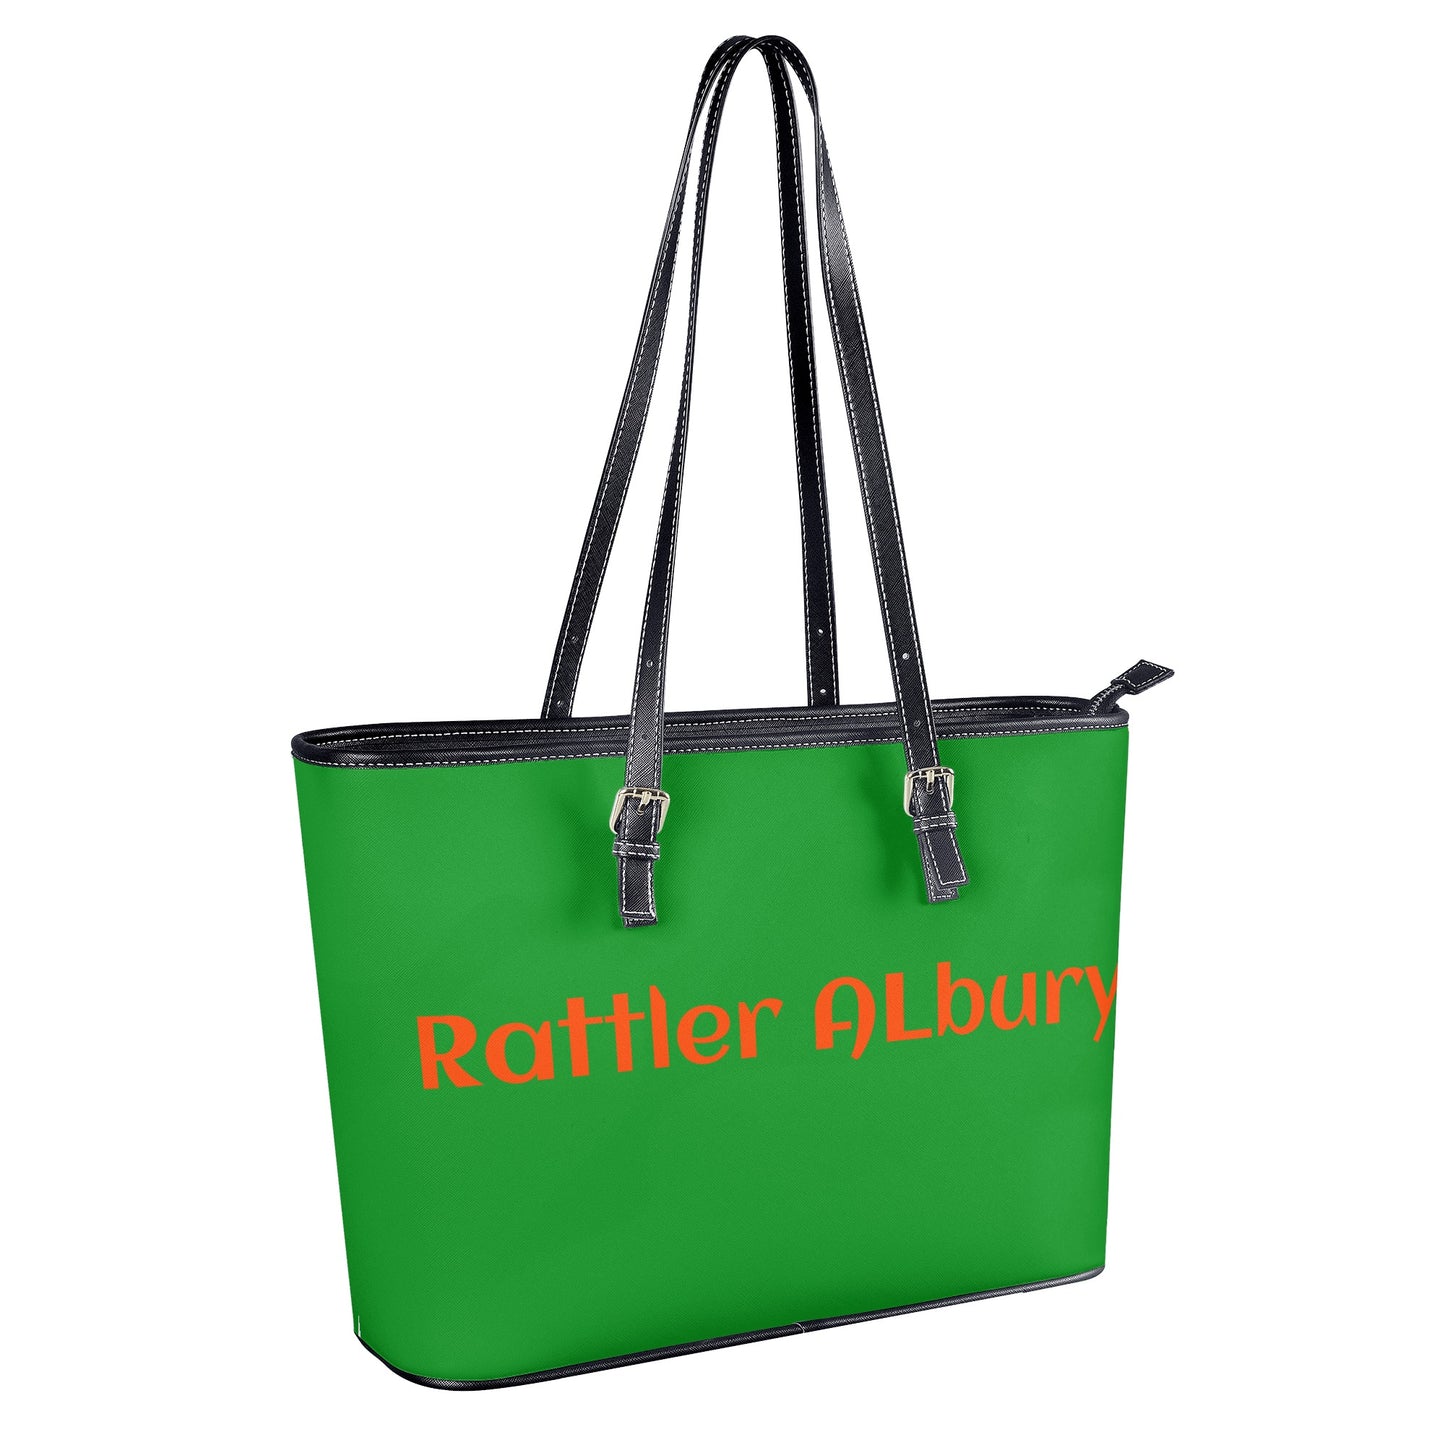 Rattler Albury Fashion PU Tote Bags